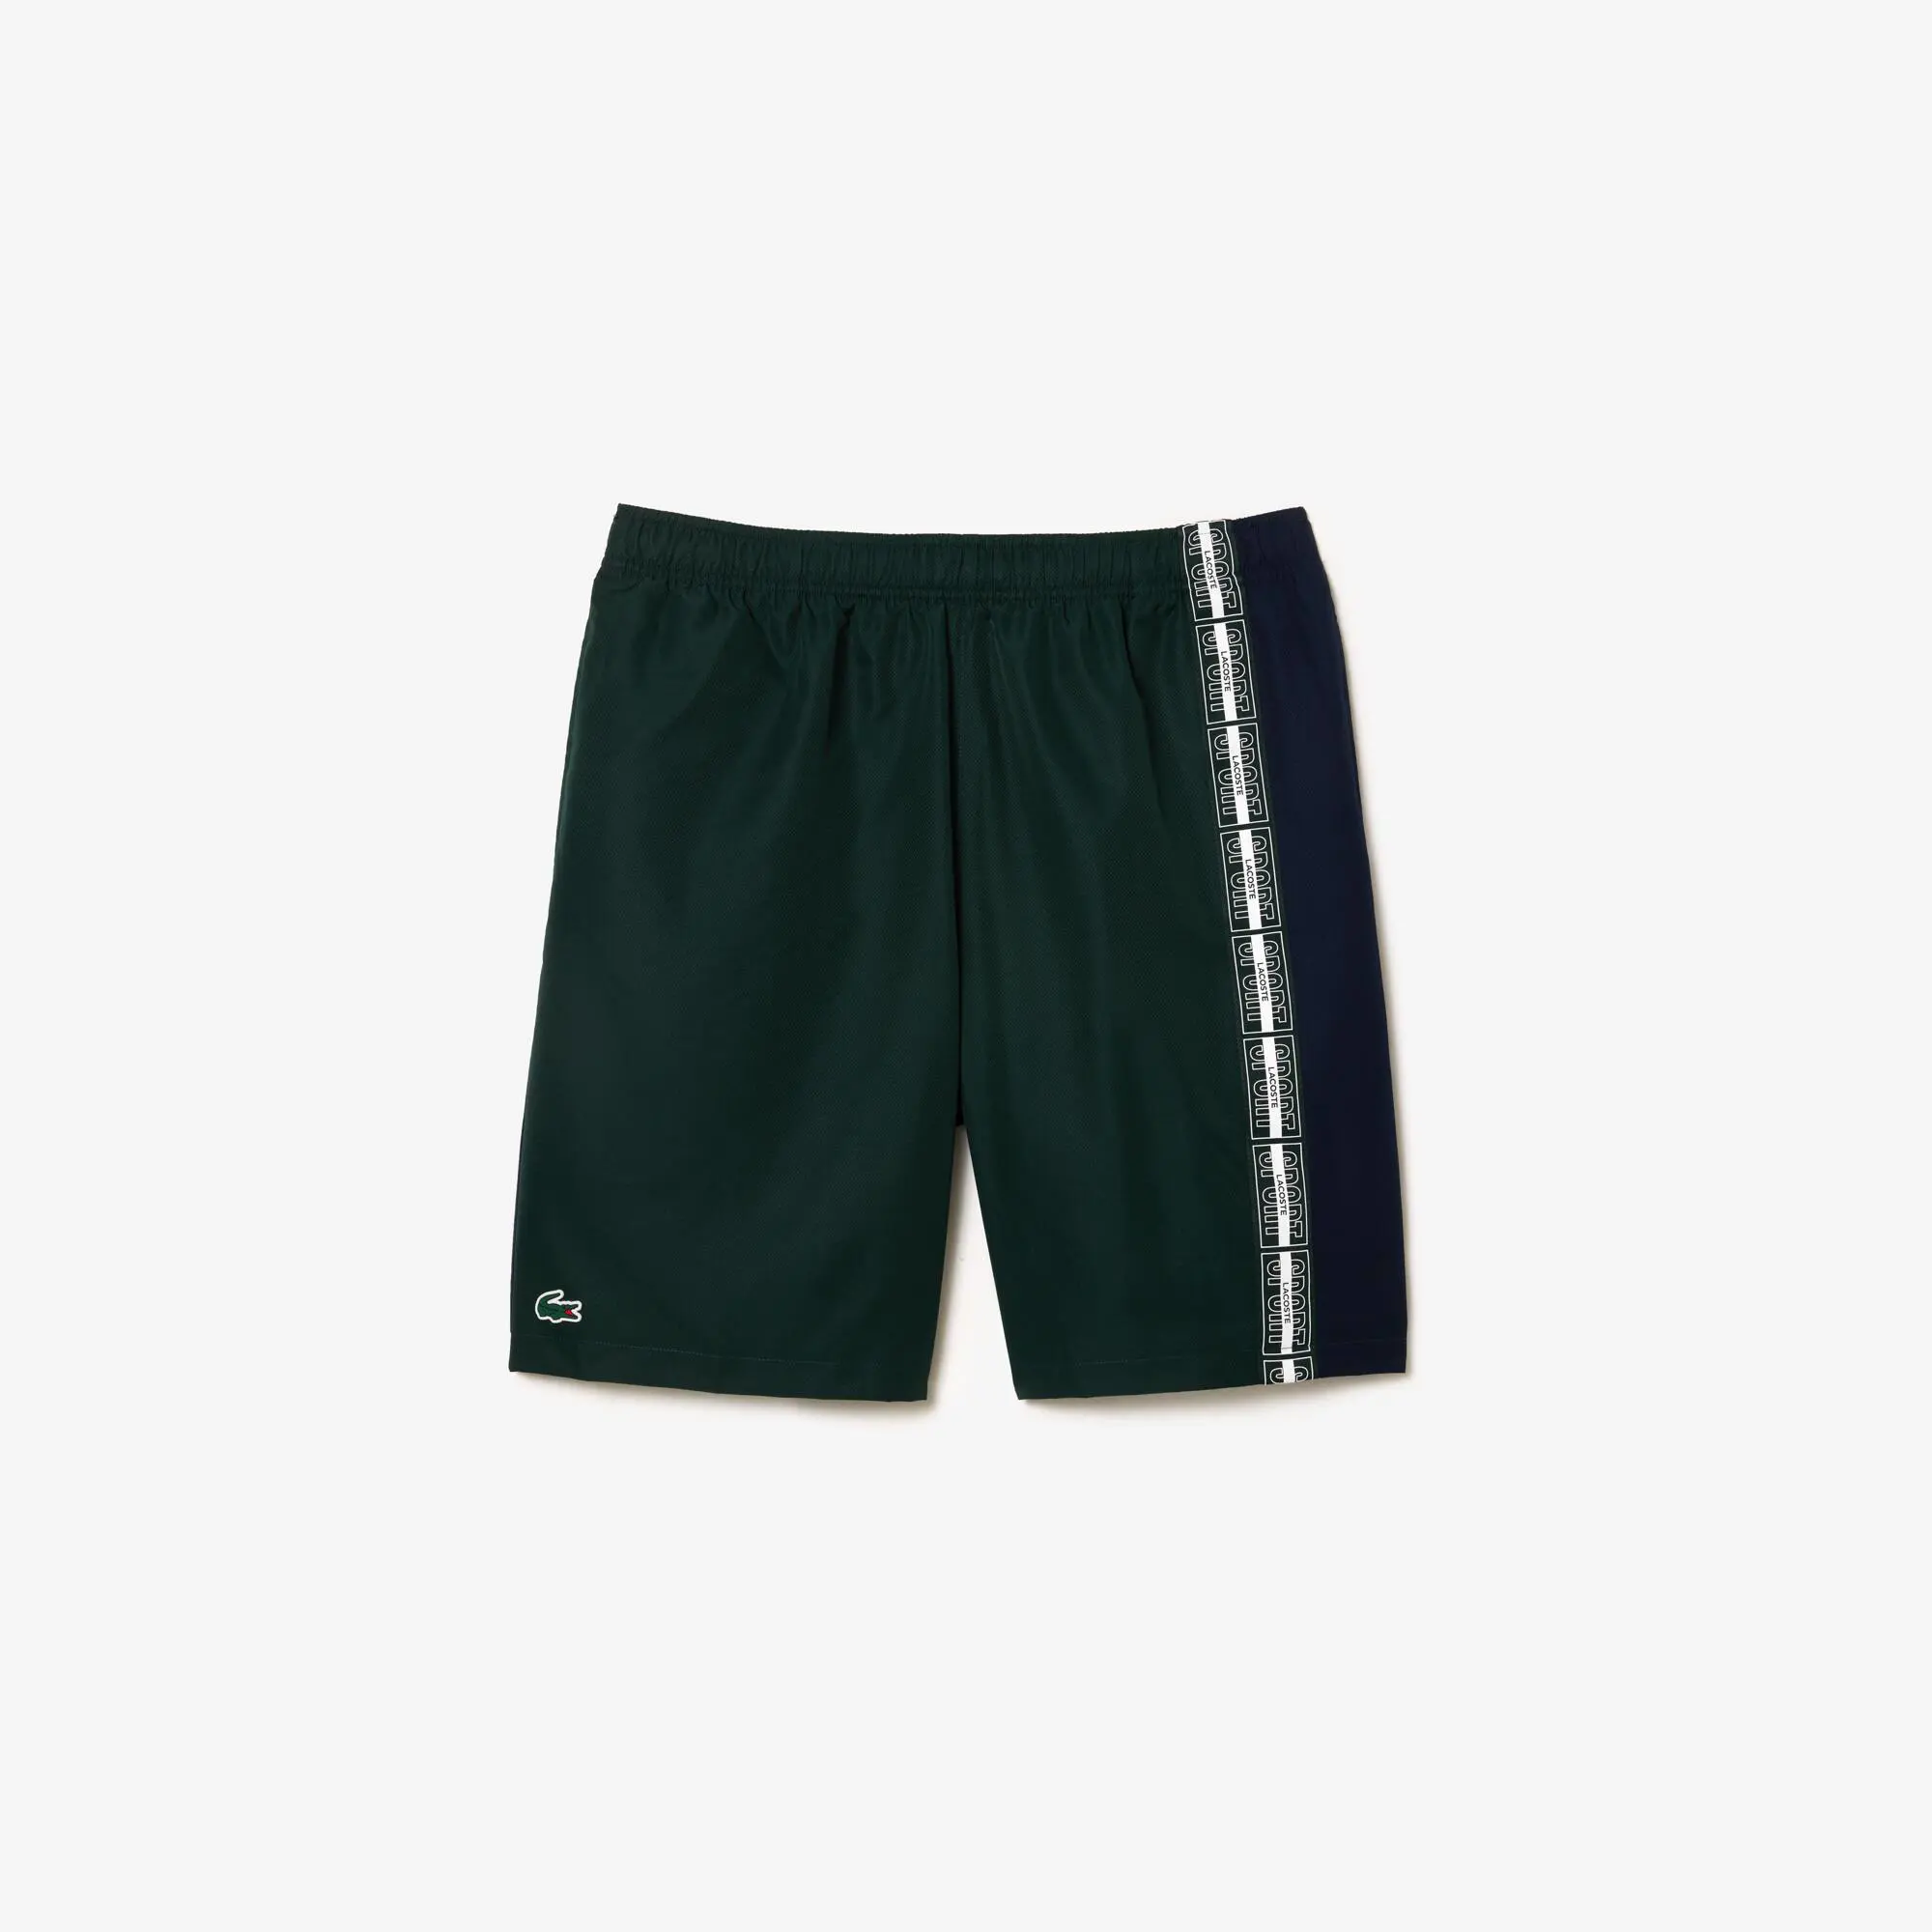 Lacoste Tennis-Shorts aus recyceltem Gewebe. 1